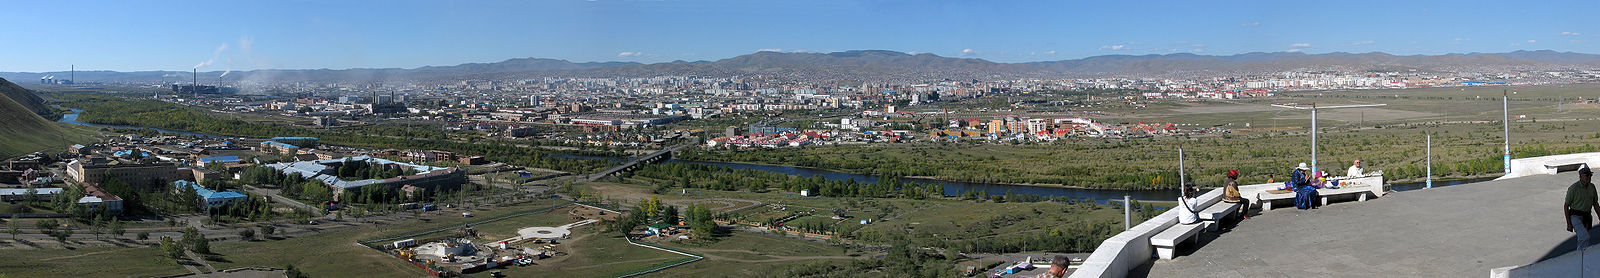 Panorama von Ulaanbaatar (2005)